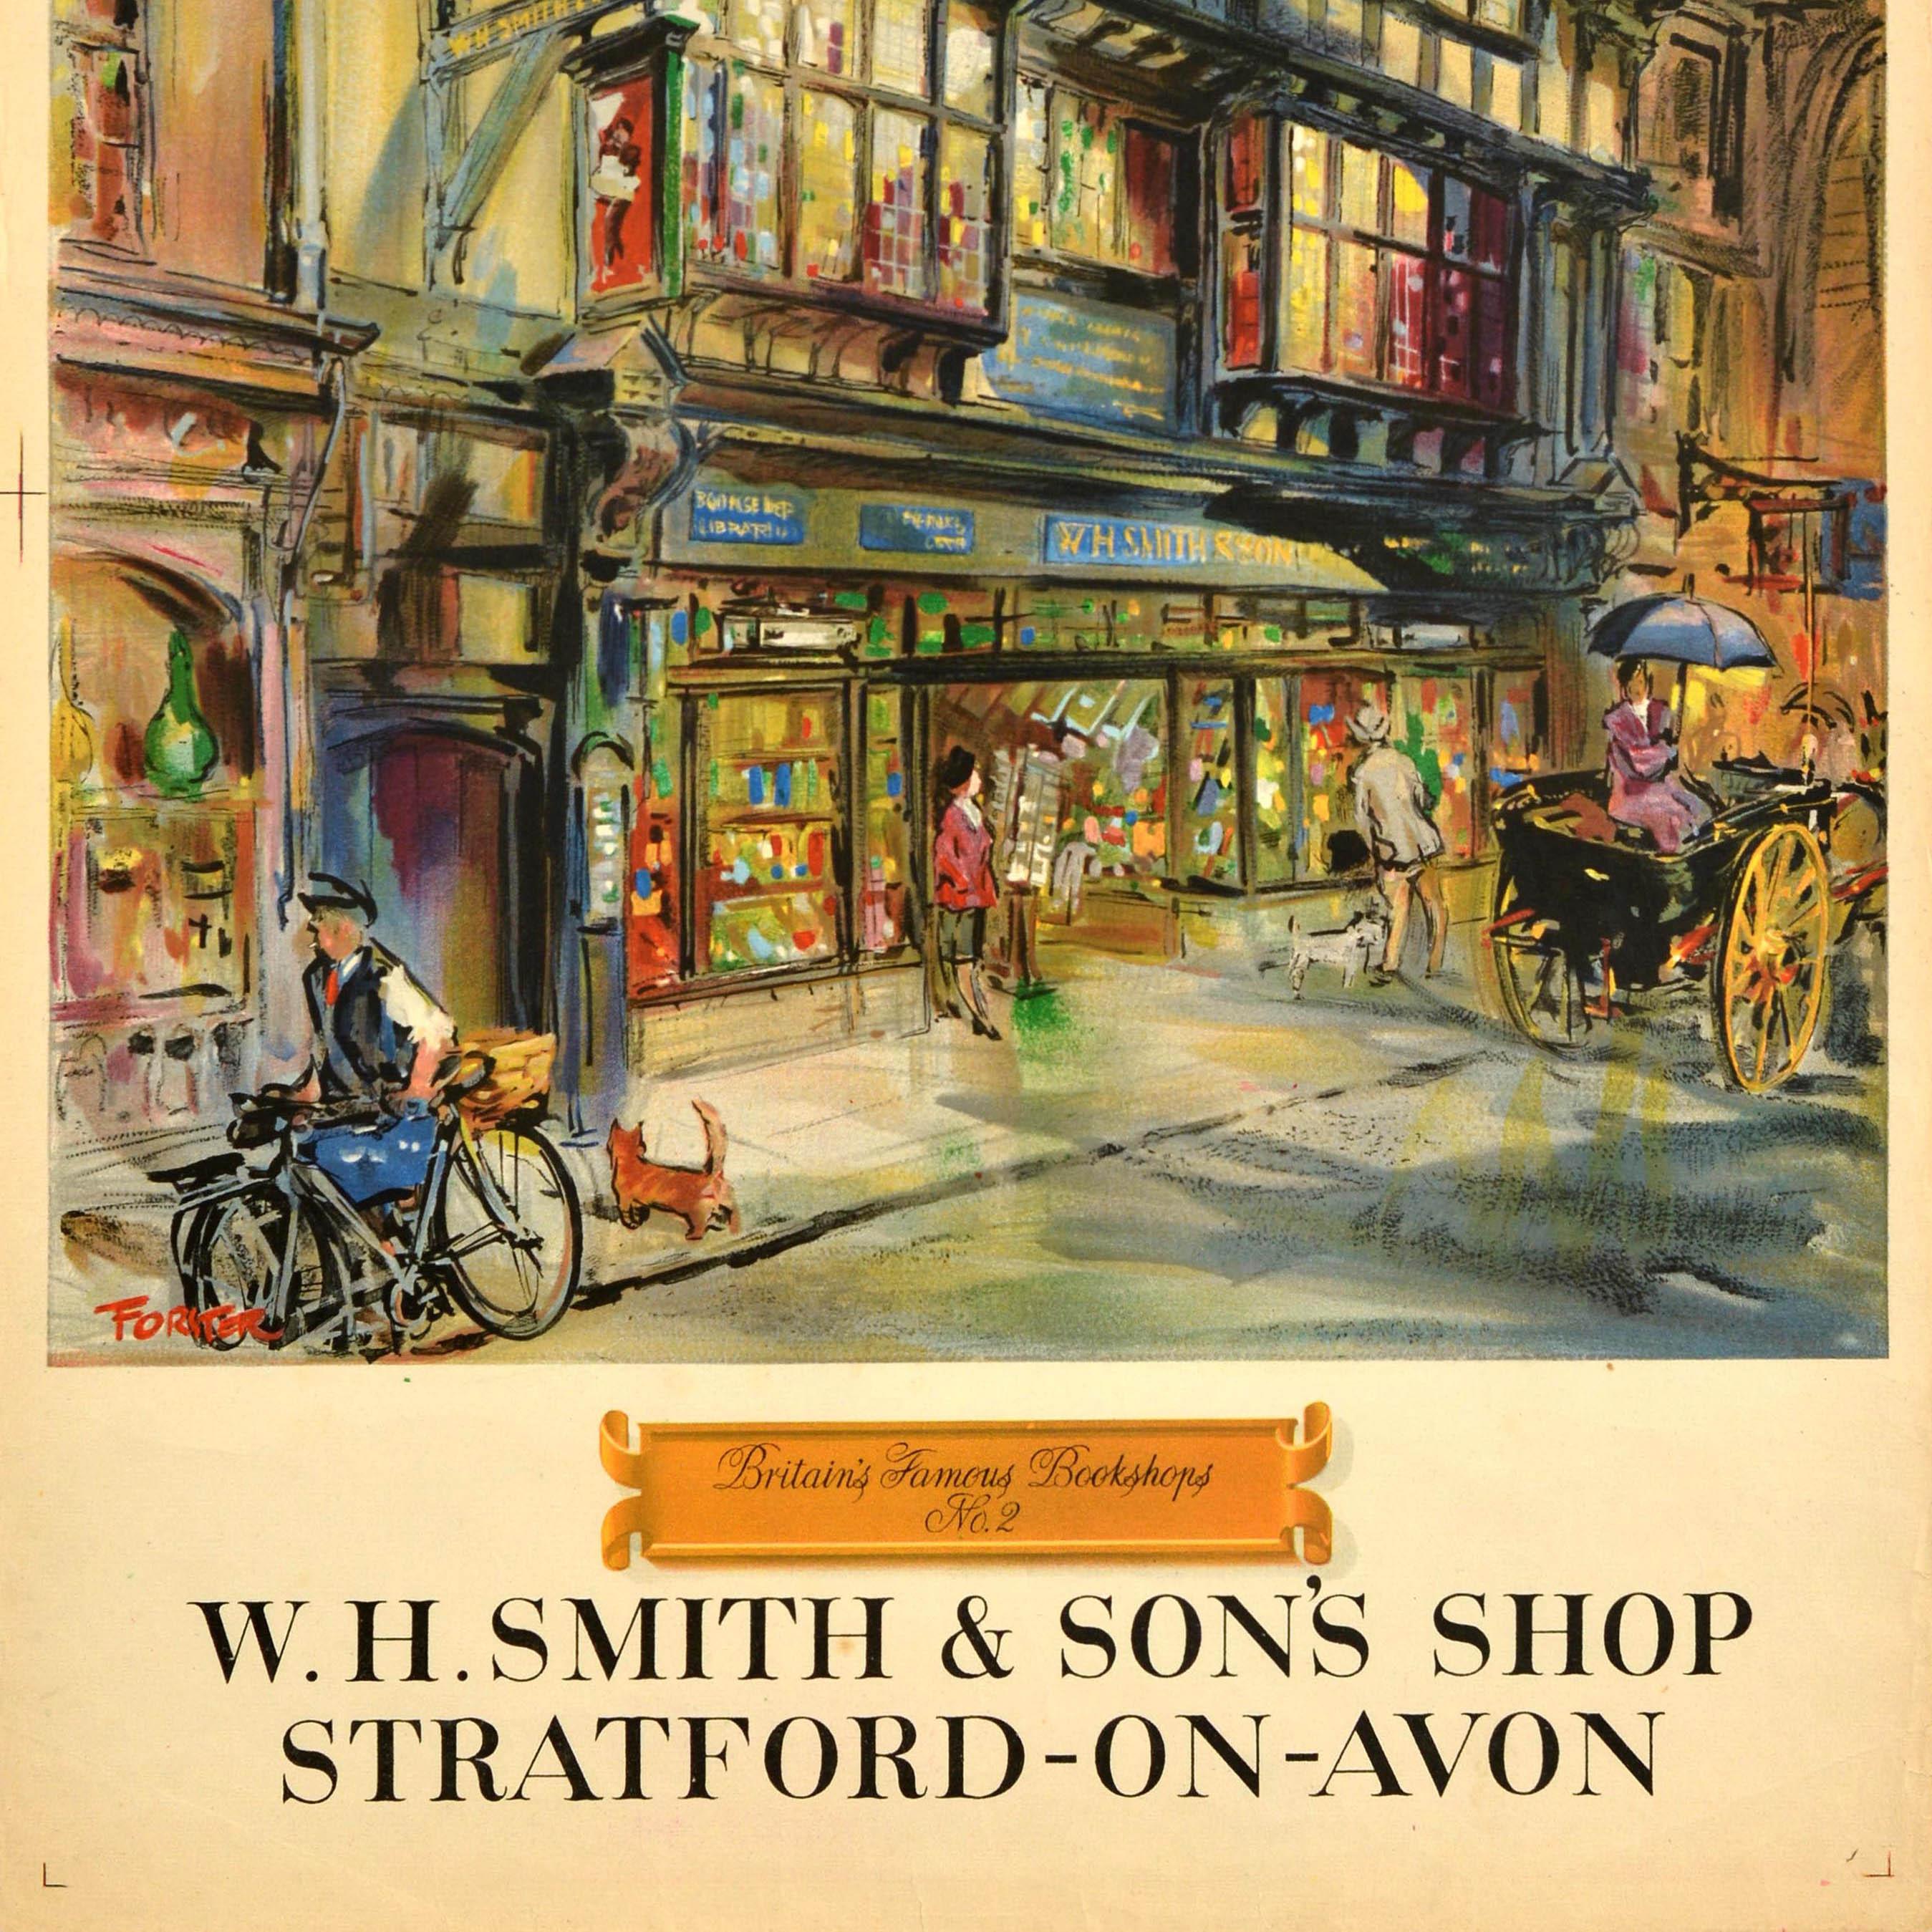 British Original Vintage Advertising Poster WH Smith Famous Bookshops Stratford-on-Avon